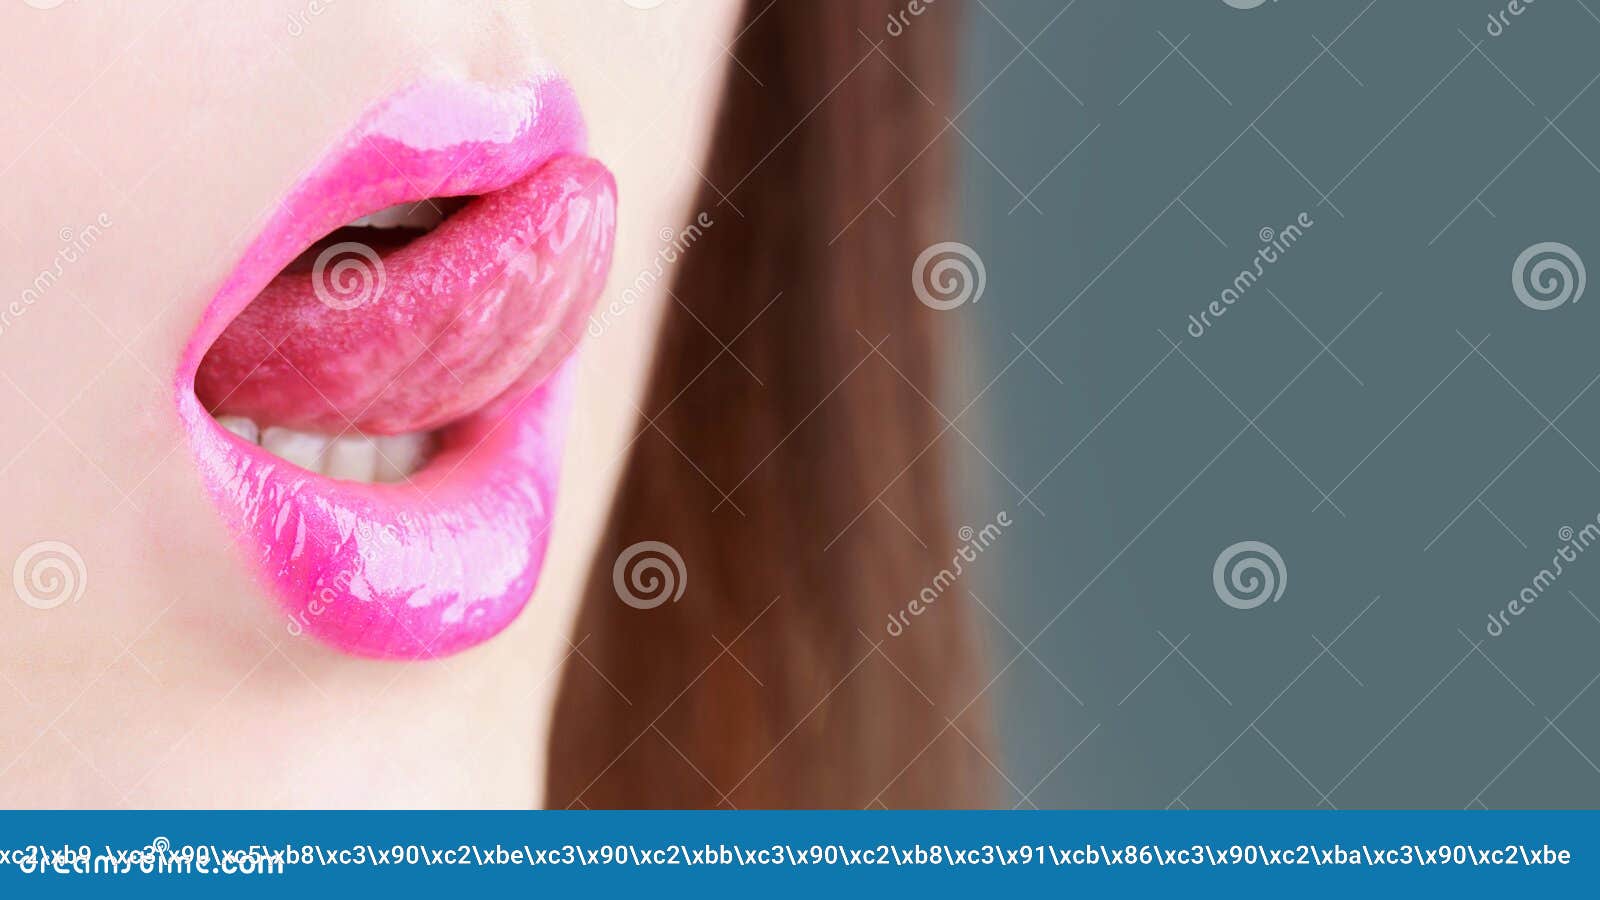 Girls with tongue erotic pics